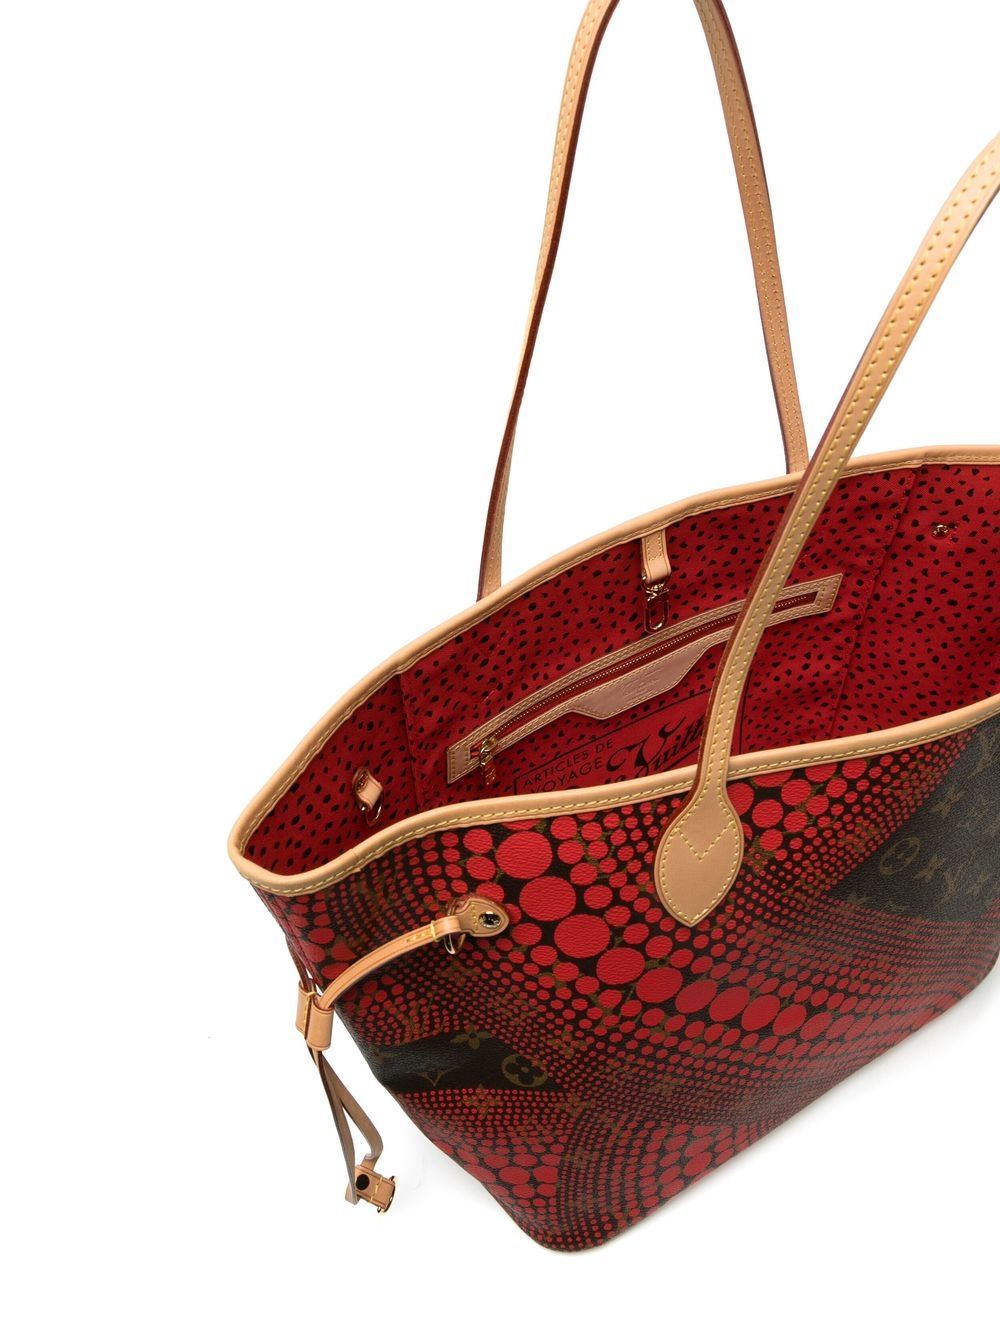 Kusama breaks house record on Vintage Louis Vuitton Neverfull Handbag